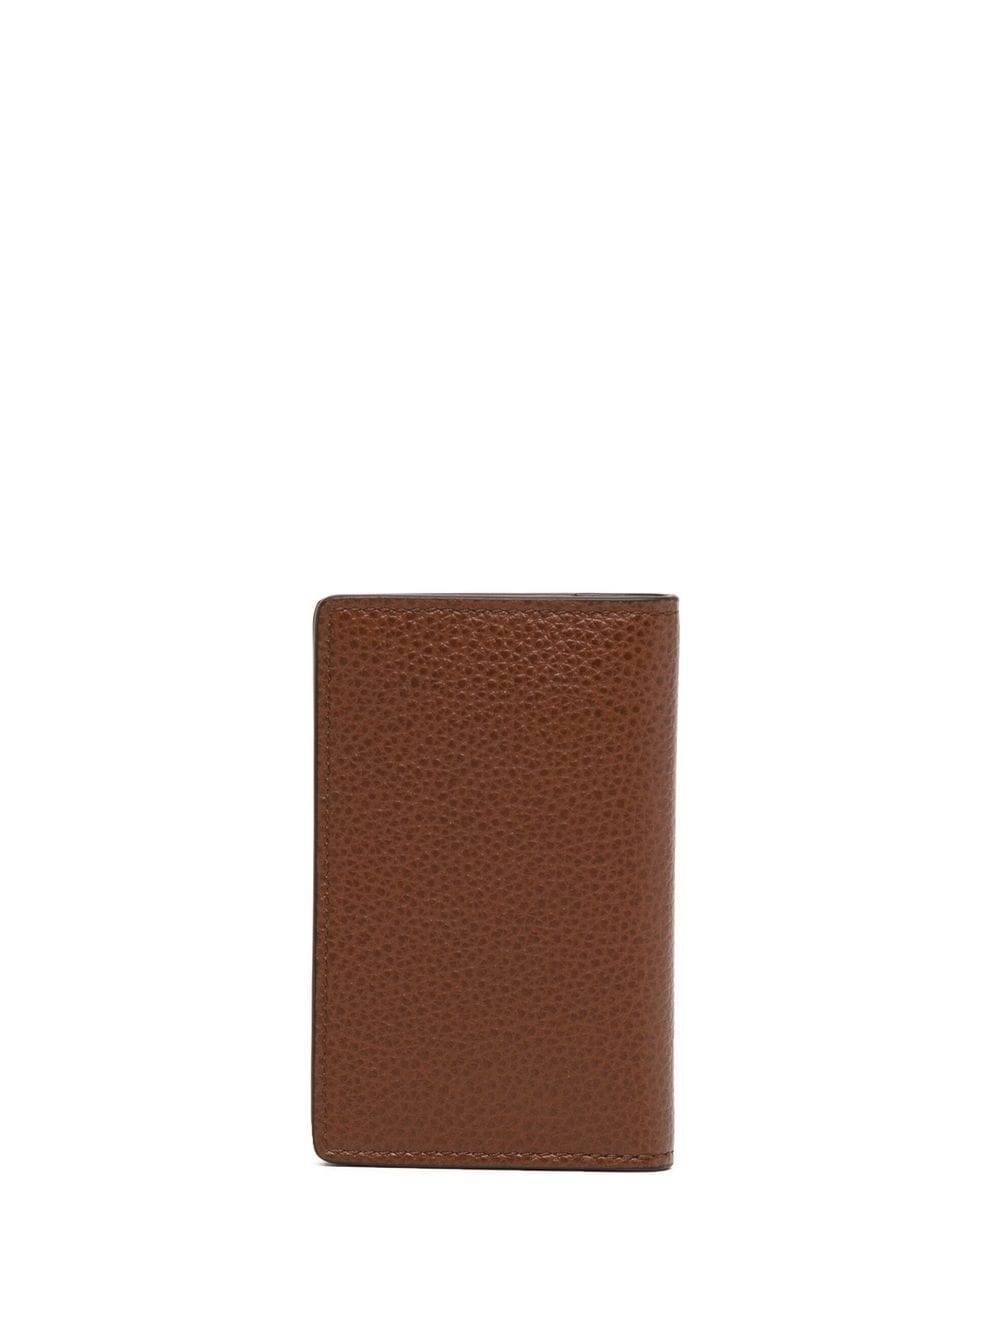 grain-leather card case - 2